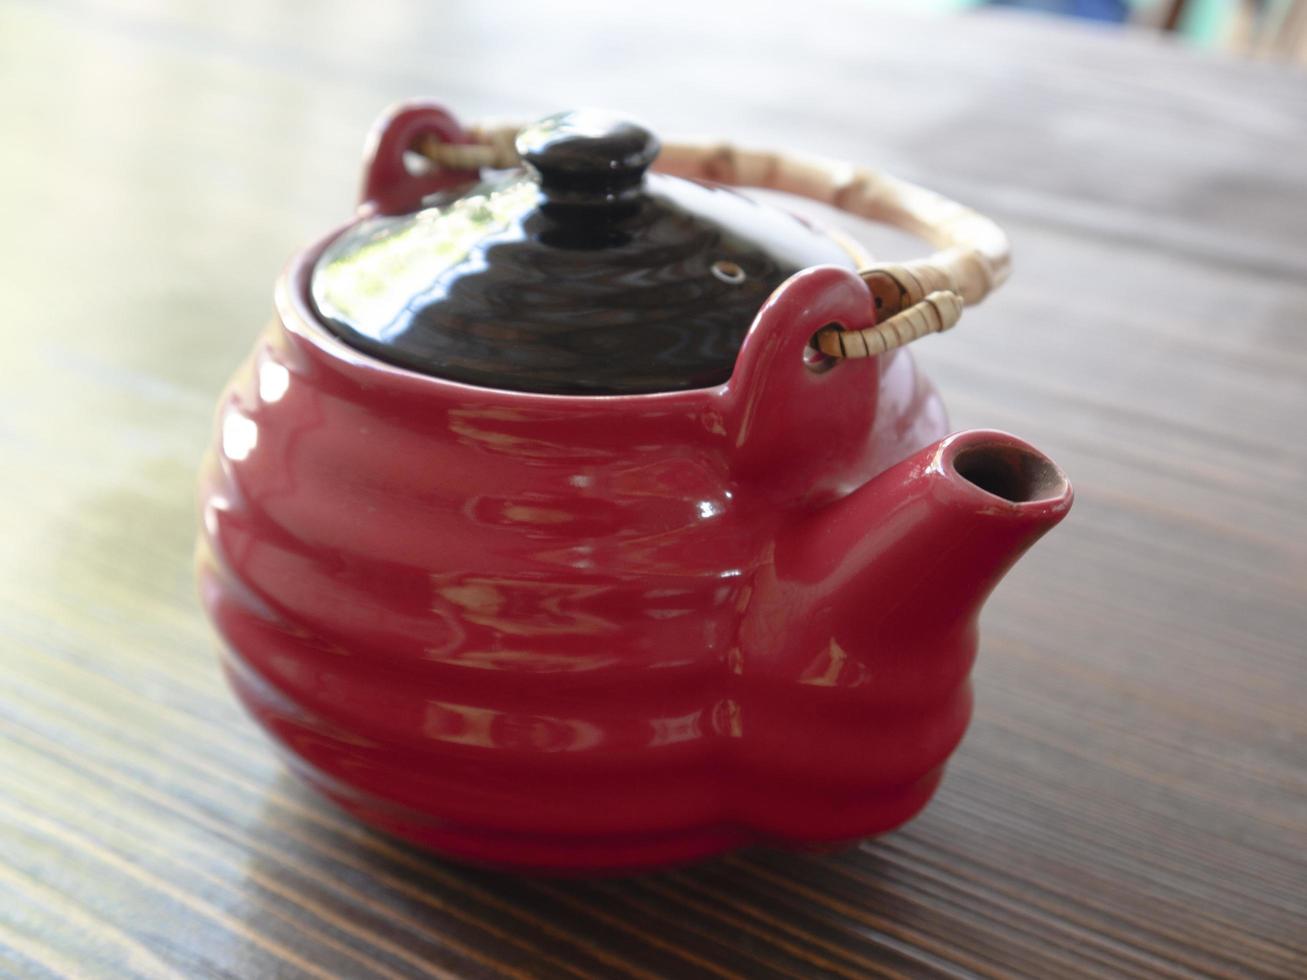 rode chinese theepot op een houten tafel foto